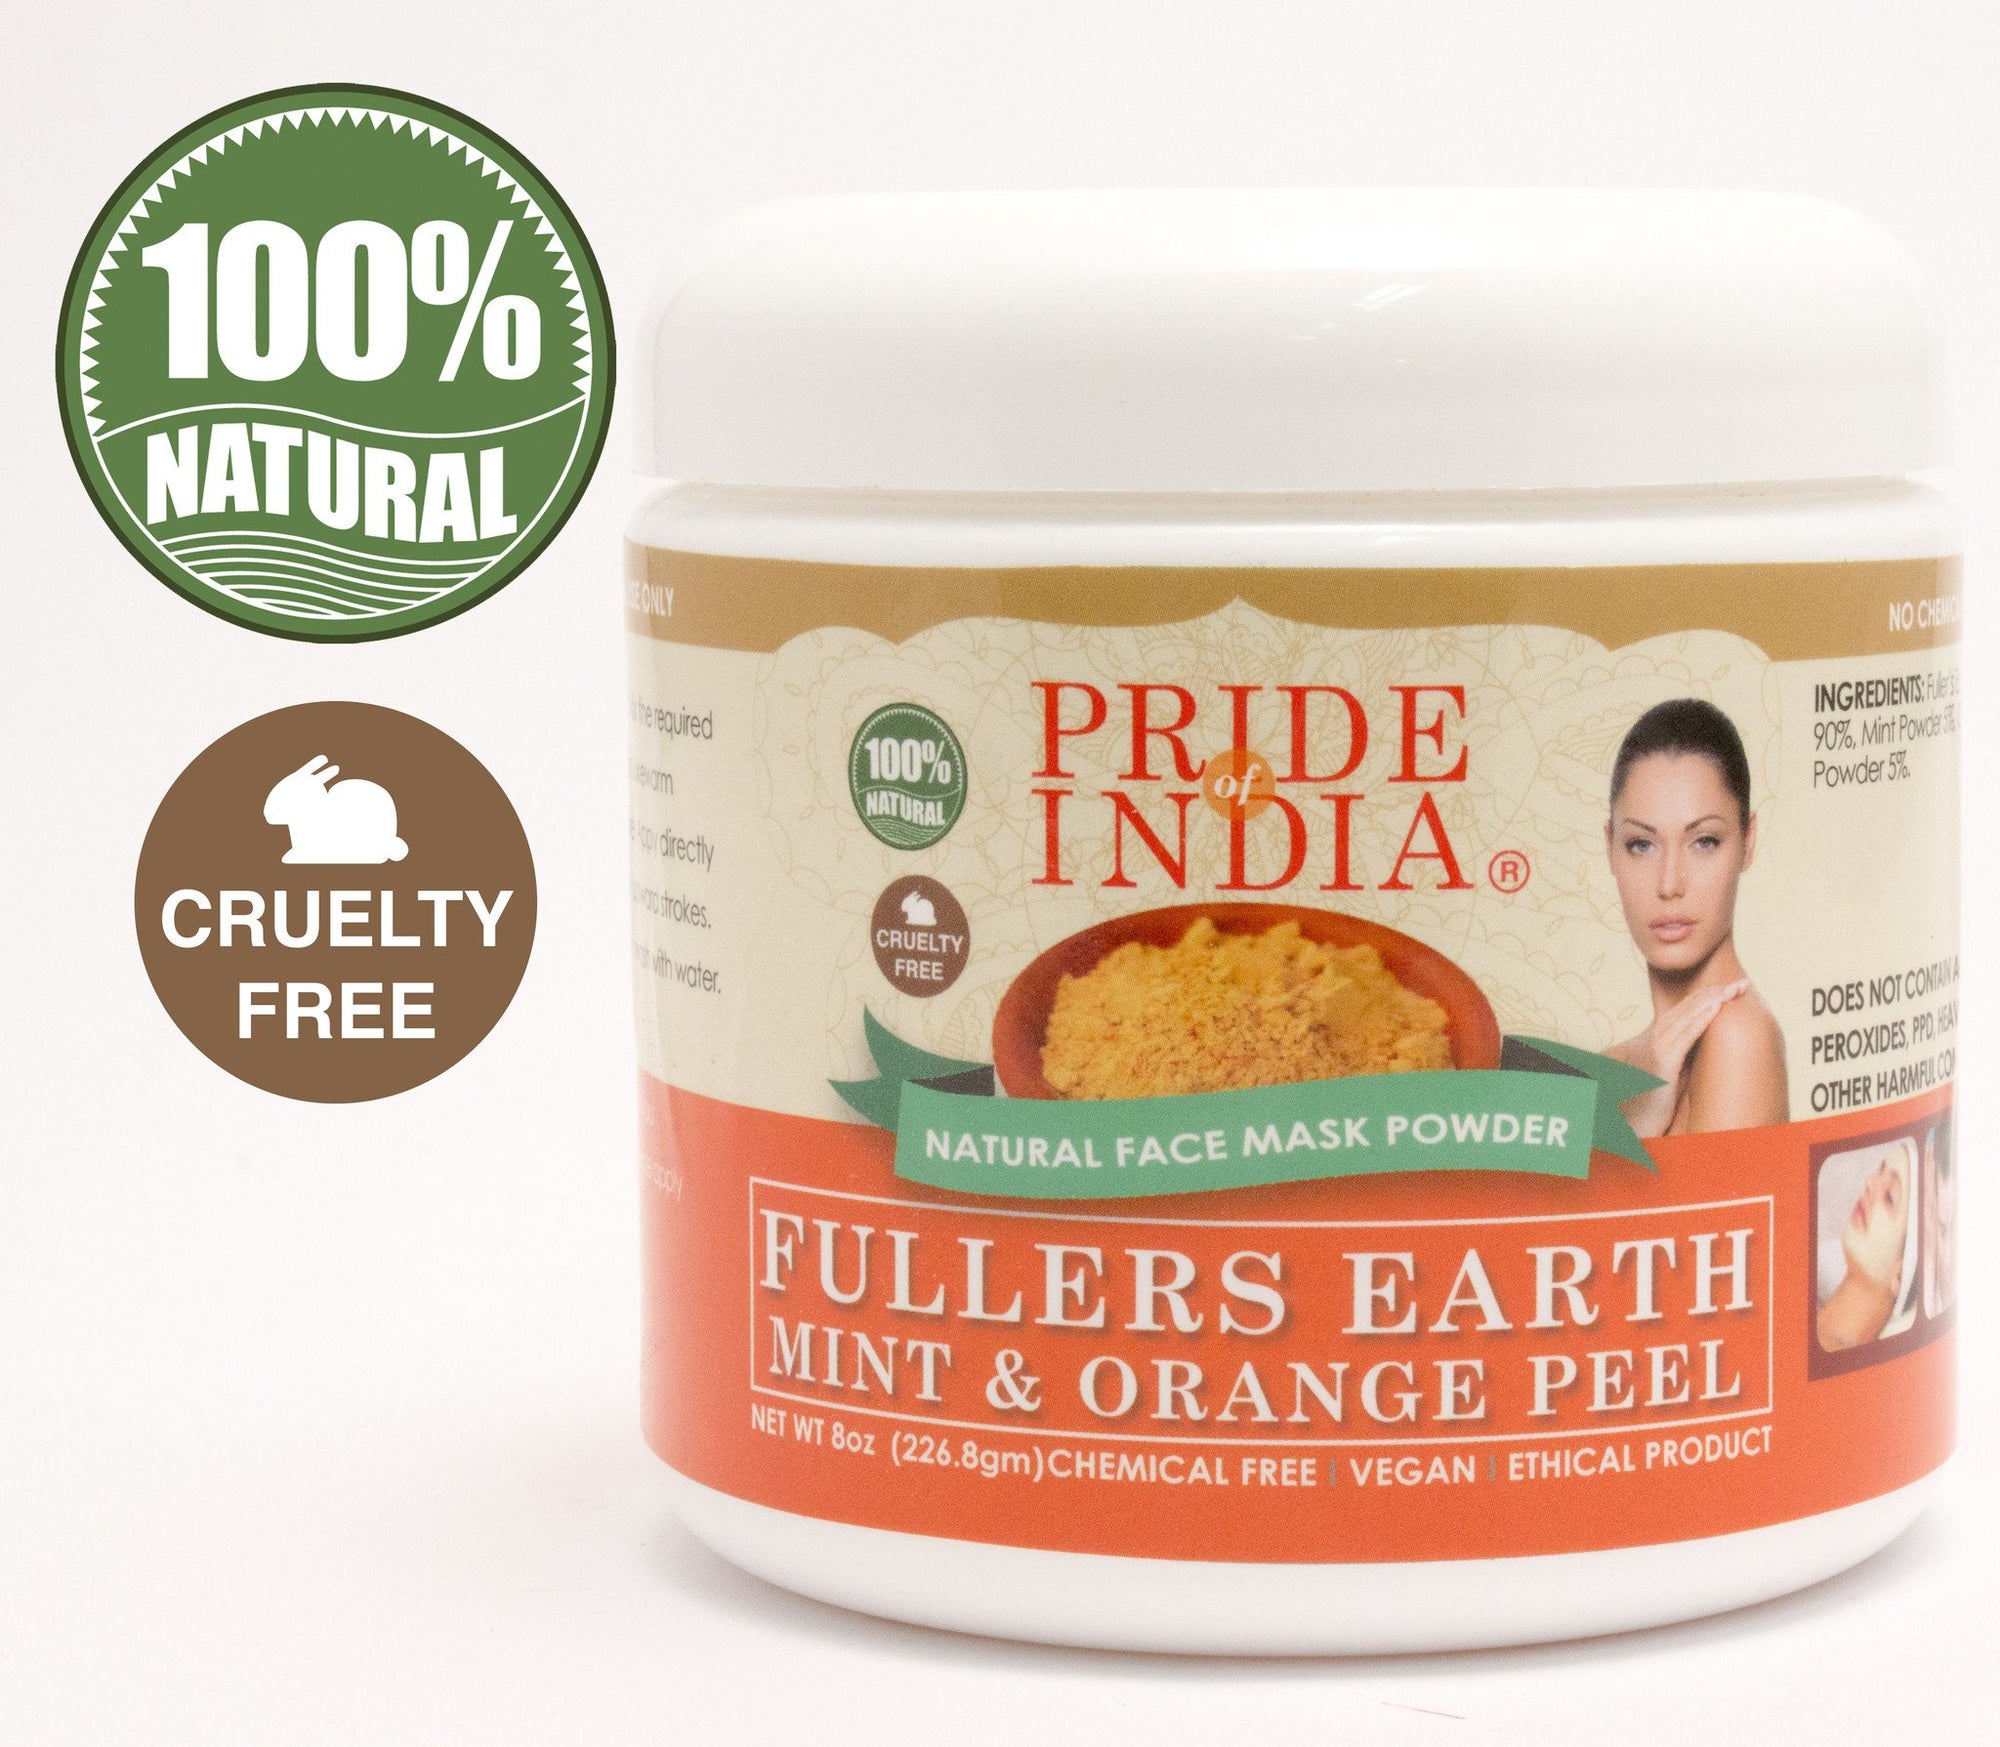 Fuller's Earth Deep Cleansing Clay Powder w/ Mint & Orange Peel, Half Pound (8oz - 227gm) Jar - Pride Of India